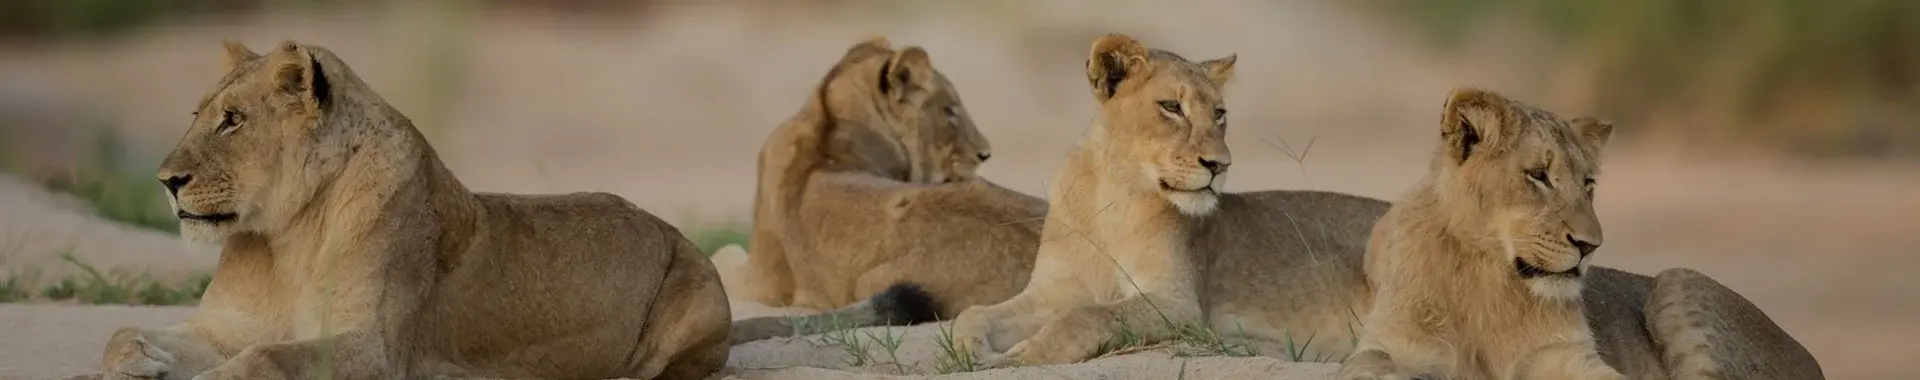 Löwen safari in tansania